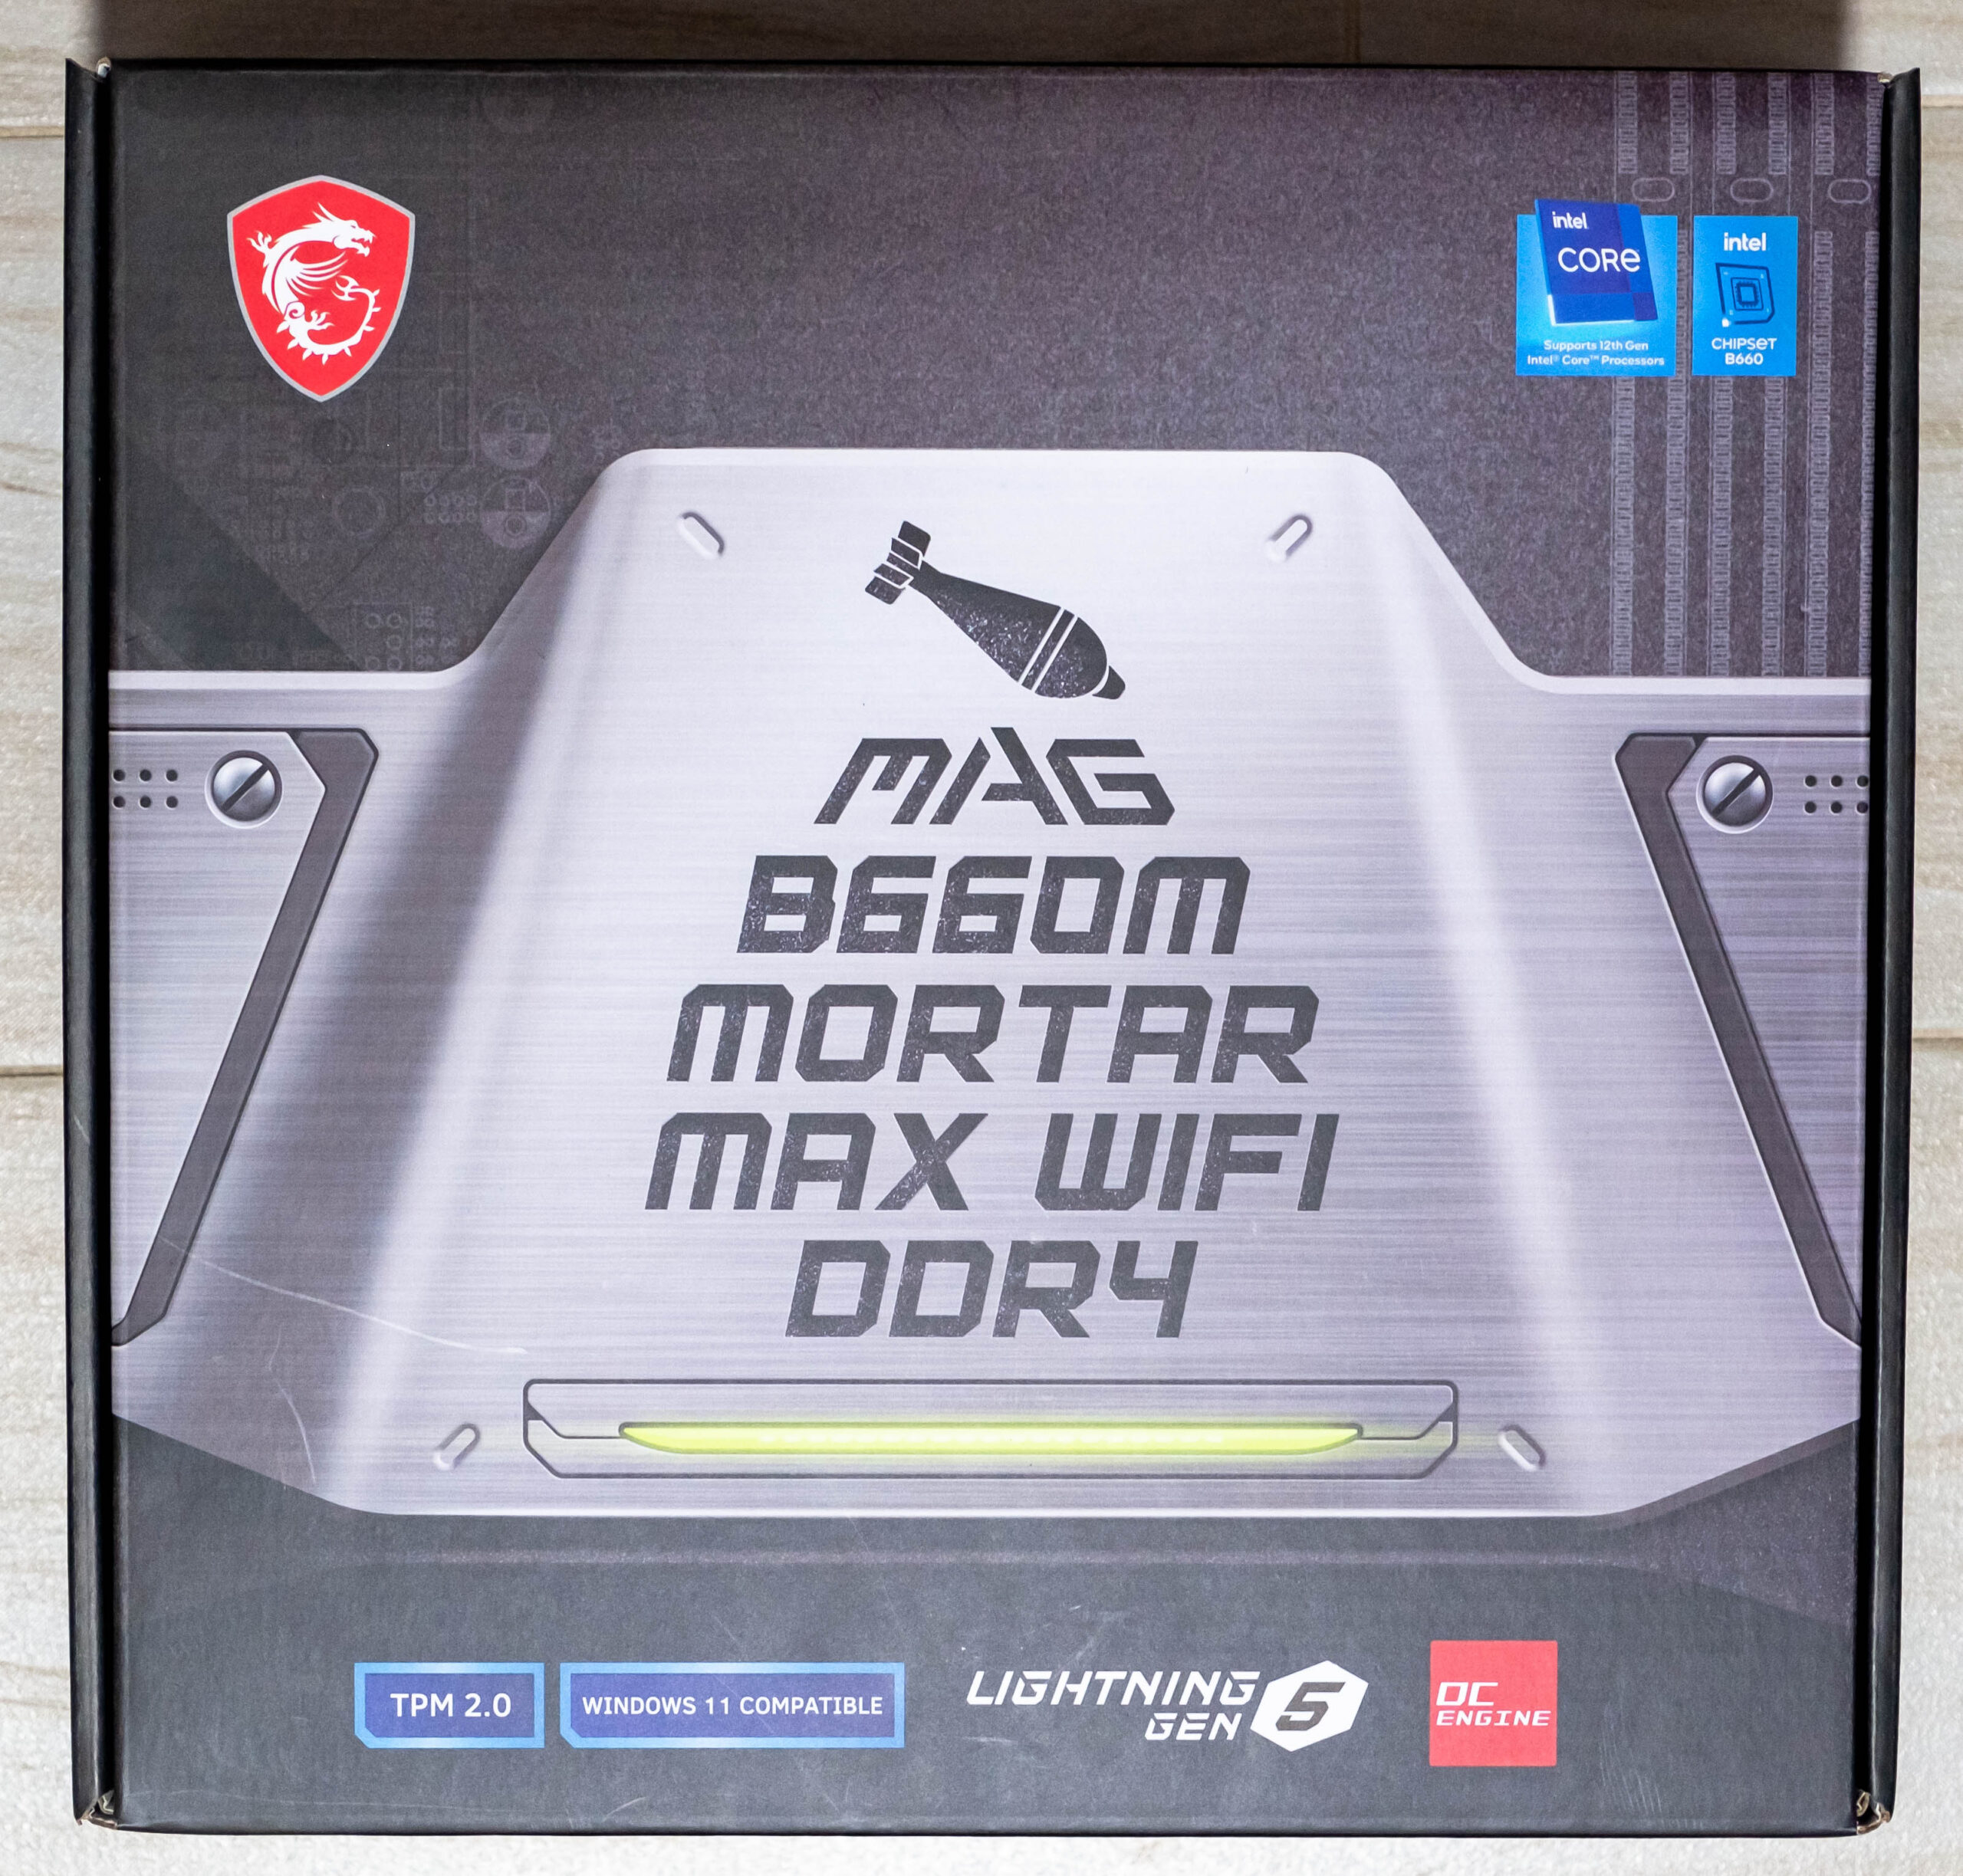 MSI MAG B660M MORTAR MAX WIFI DDR4